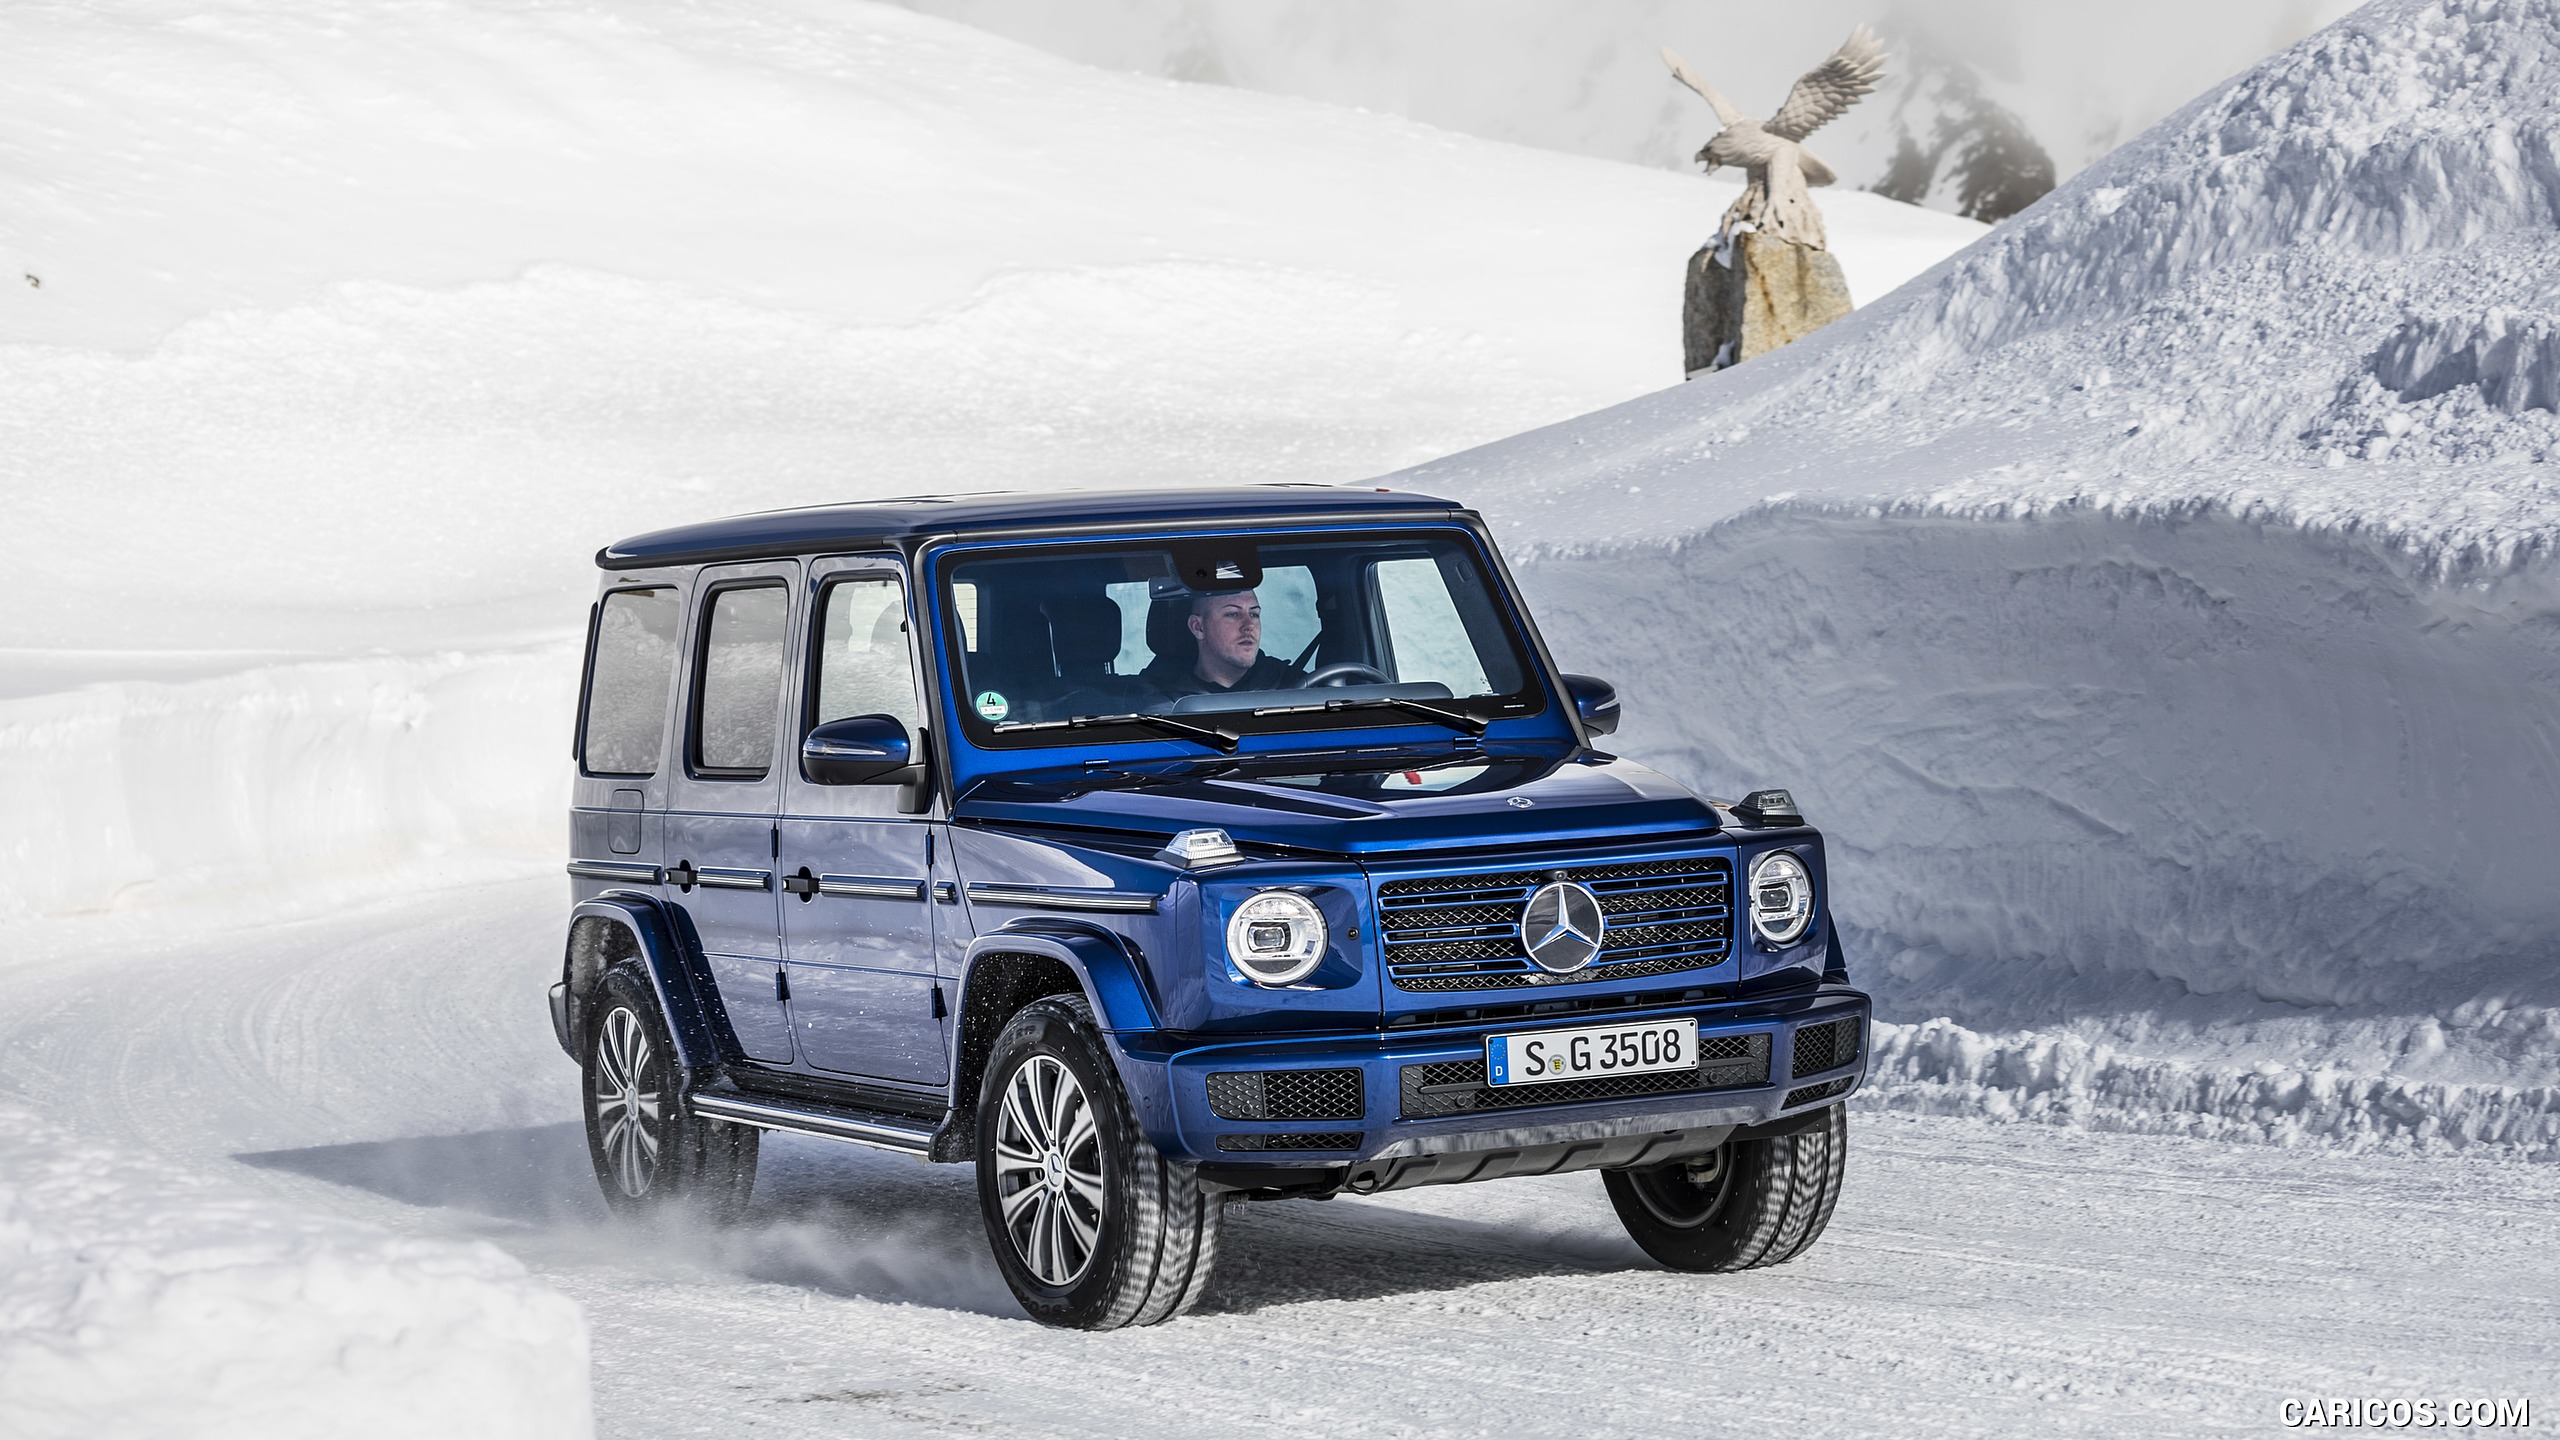 2019 Mercedes-Benz G 350 d (Brilliant Blue Metallic) - In Snow - Front Three-Quarter, #24 of 51